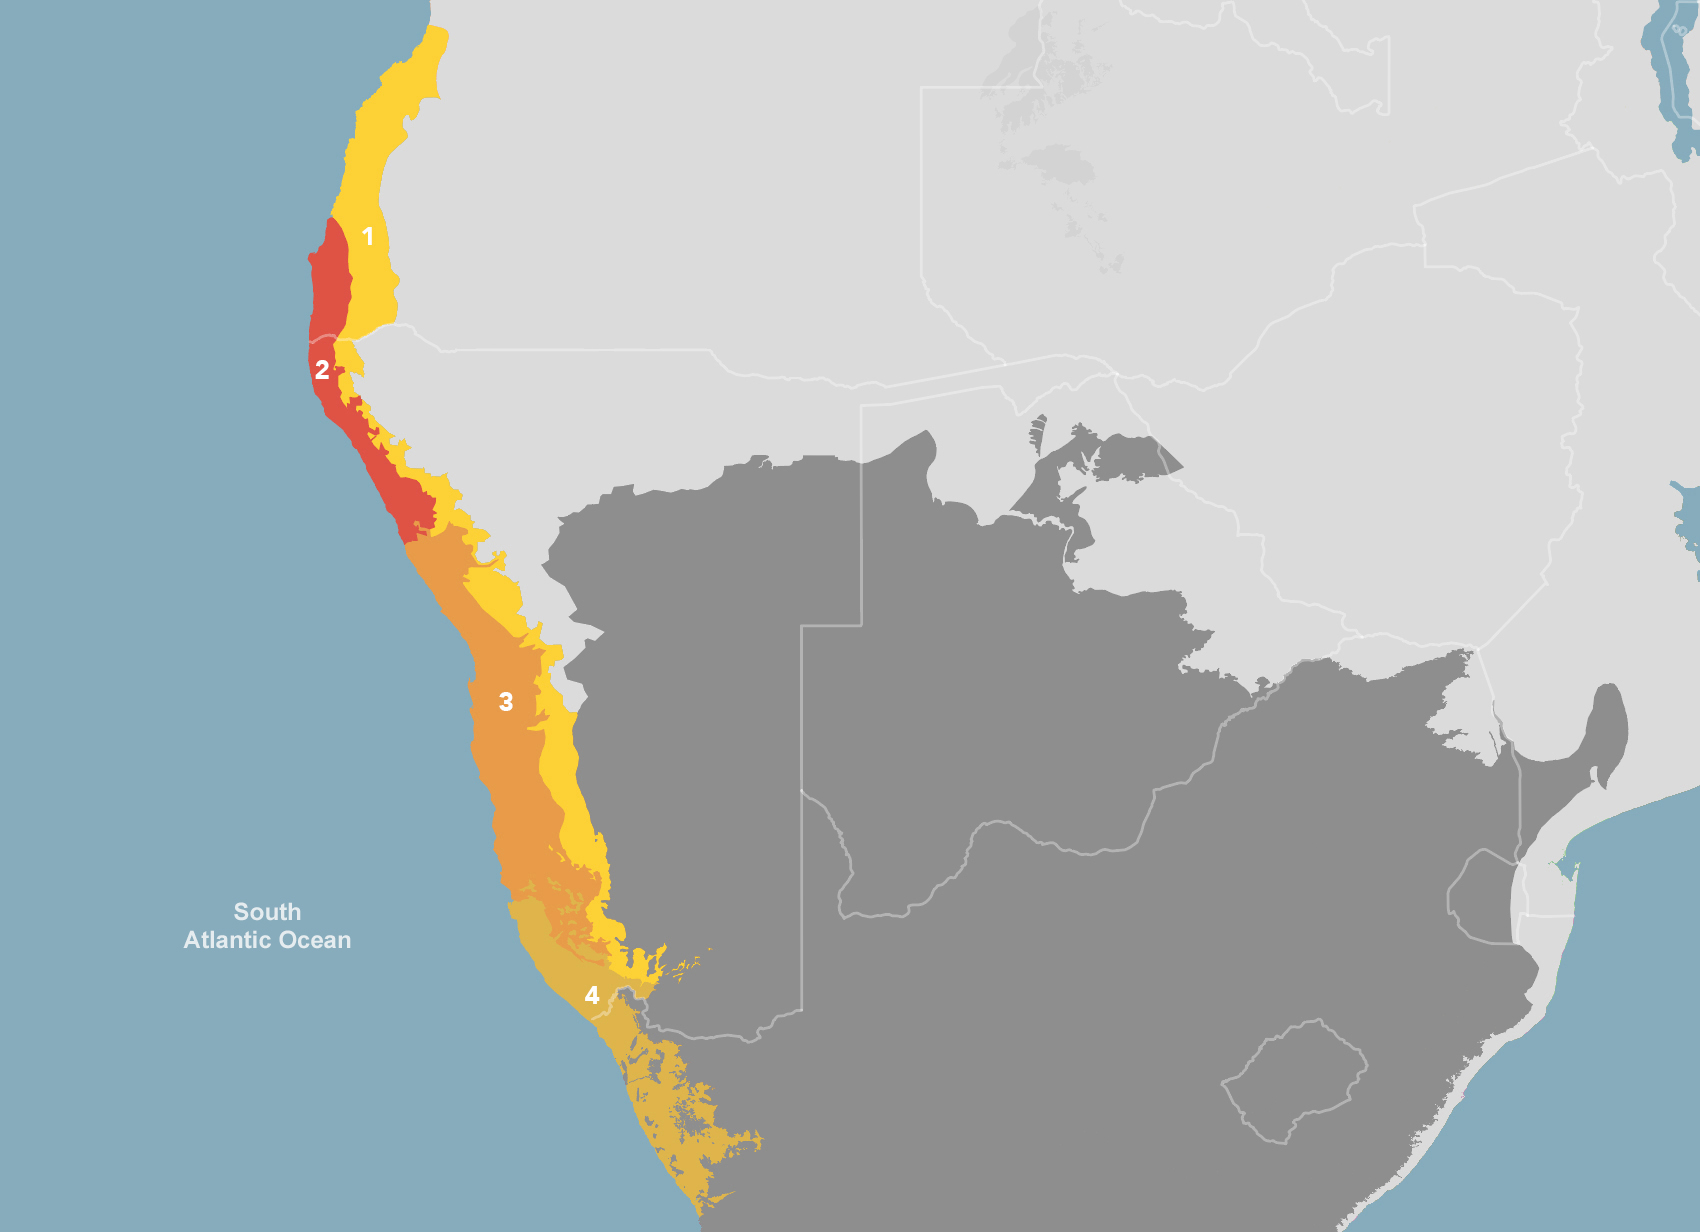 namib desert in africa map